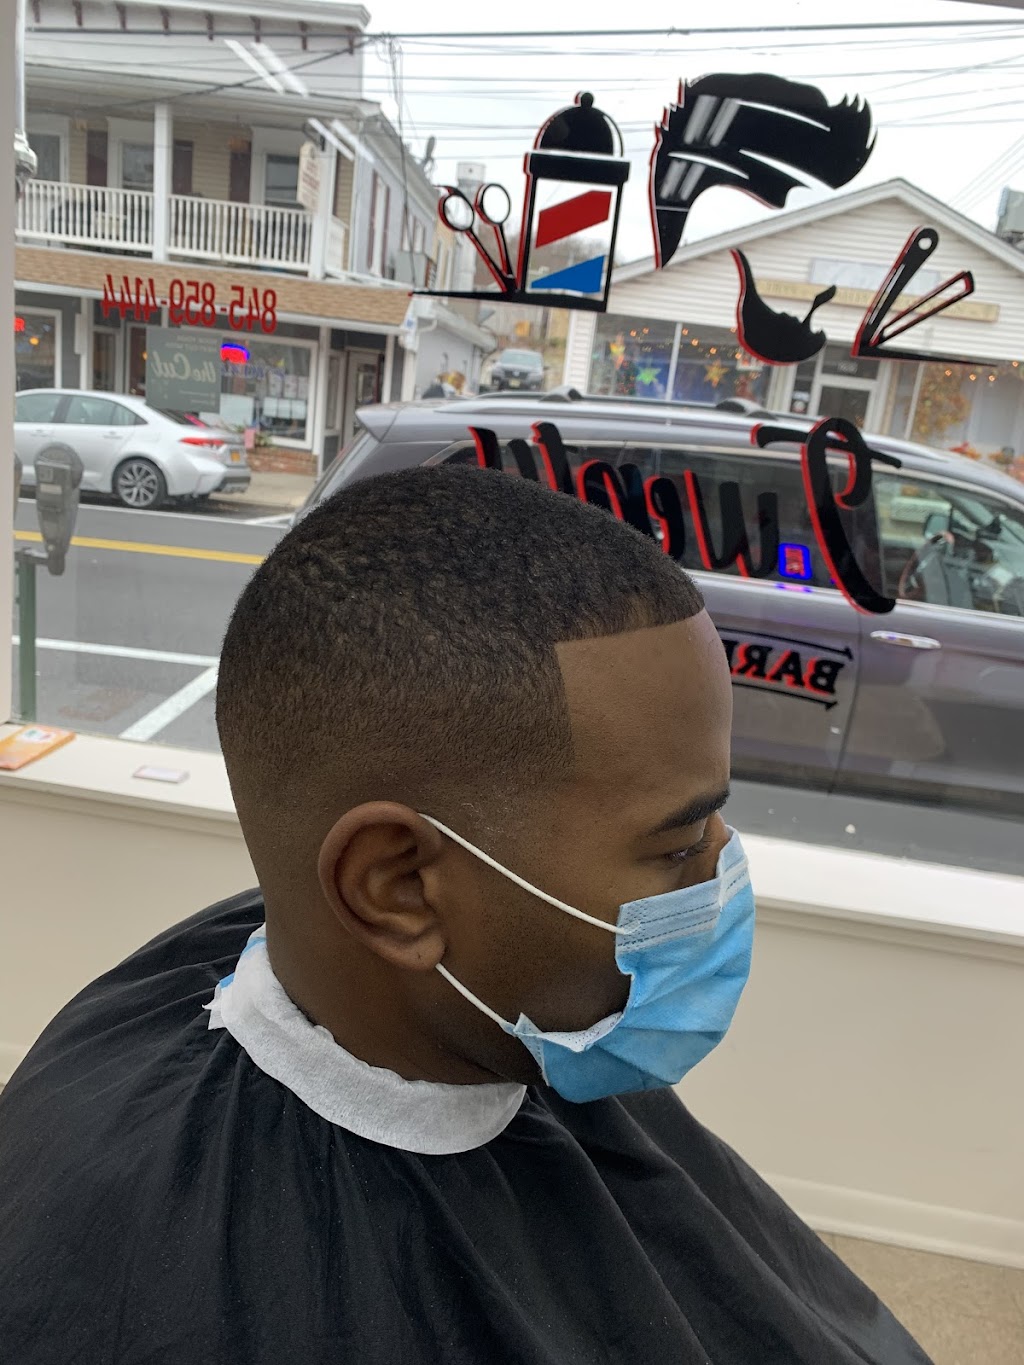 Twenty barber shop | 98 Mearns Ave, Highland Falls, NY 10928 | Phone: (845) 859-4144